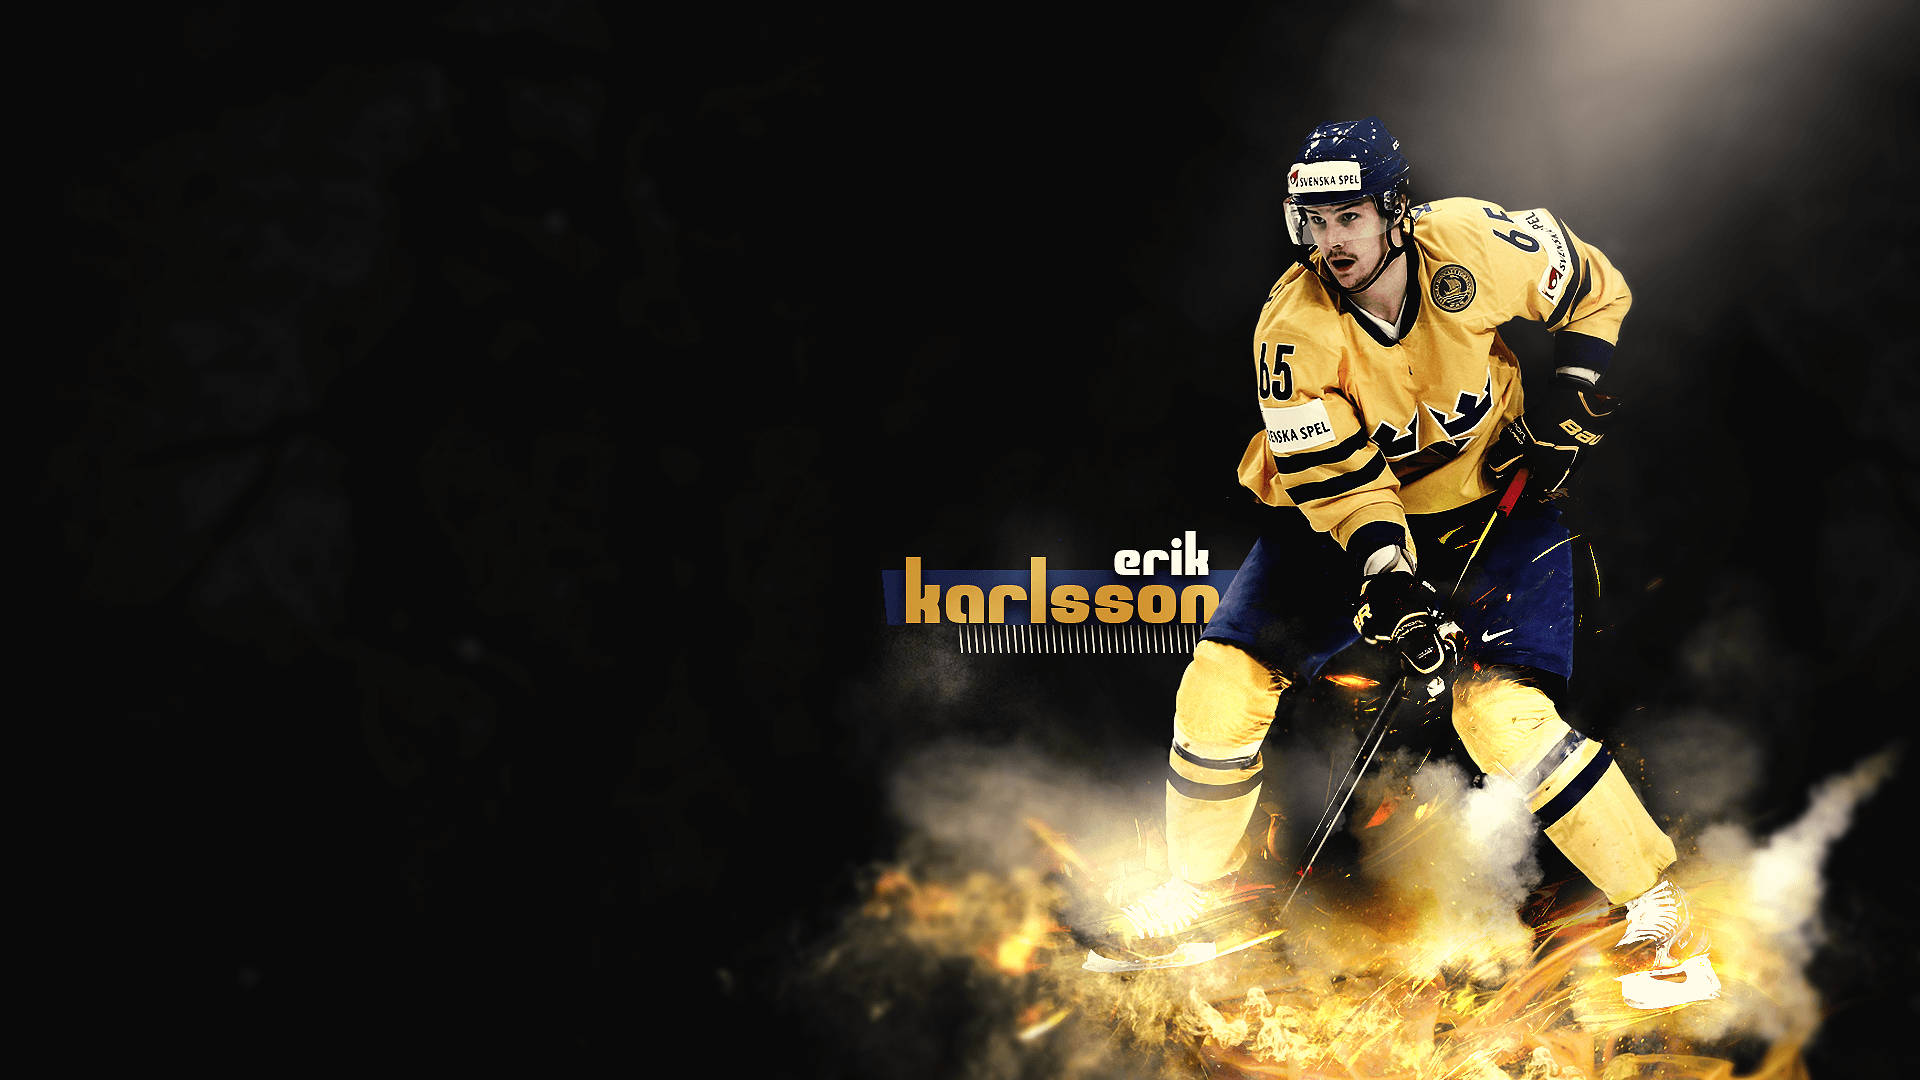 Sweden's Ace - Erik Karlsson in Action Wallpaper